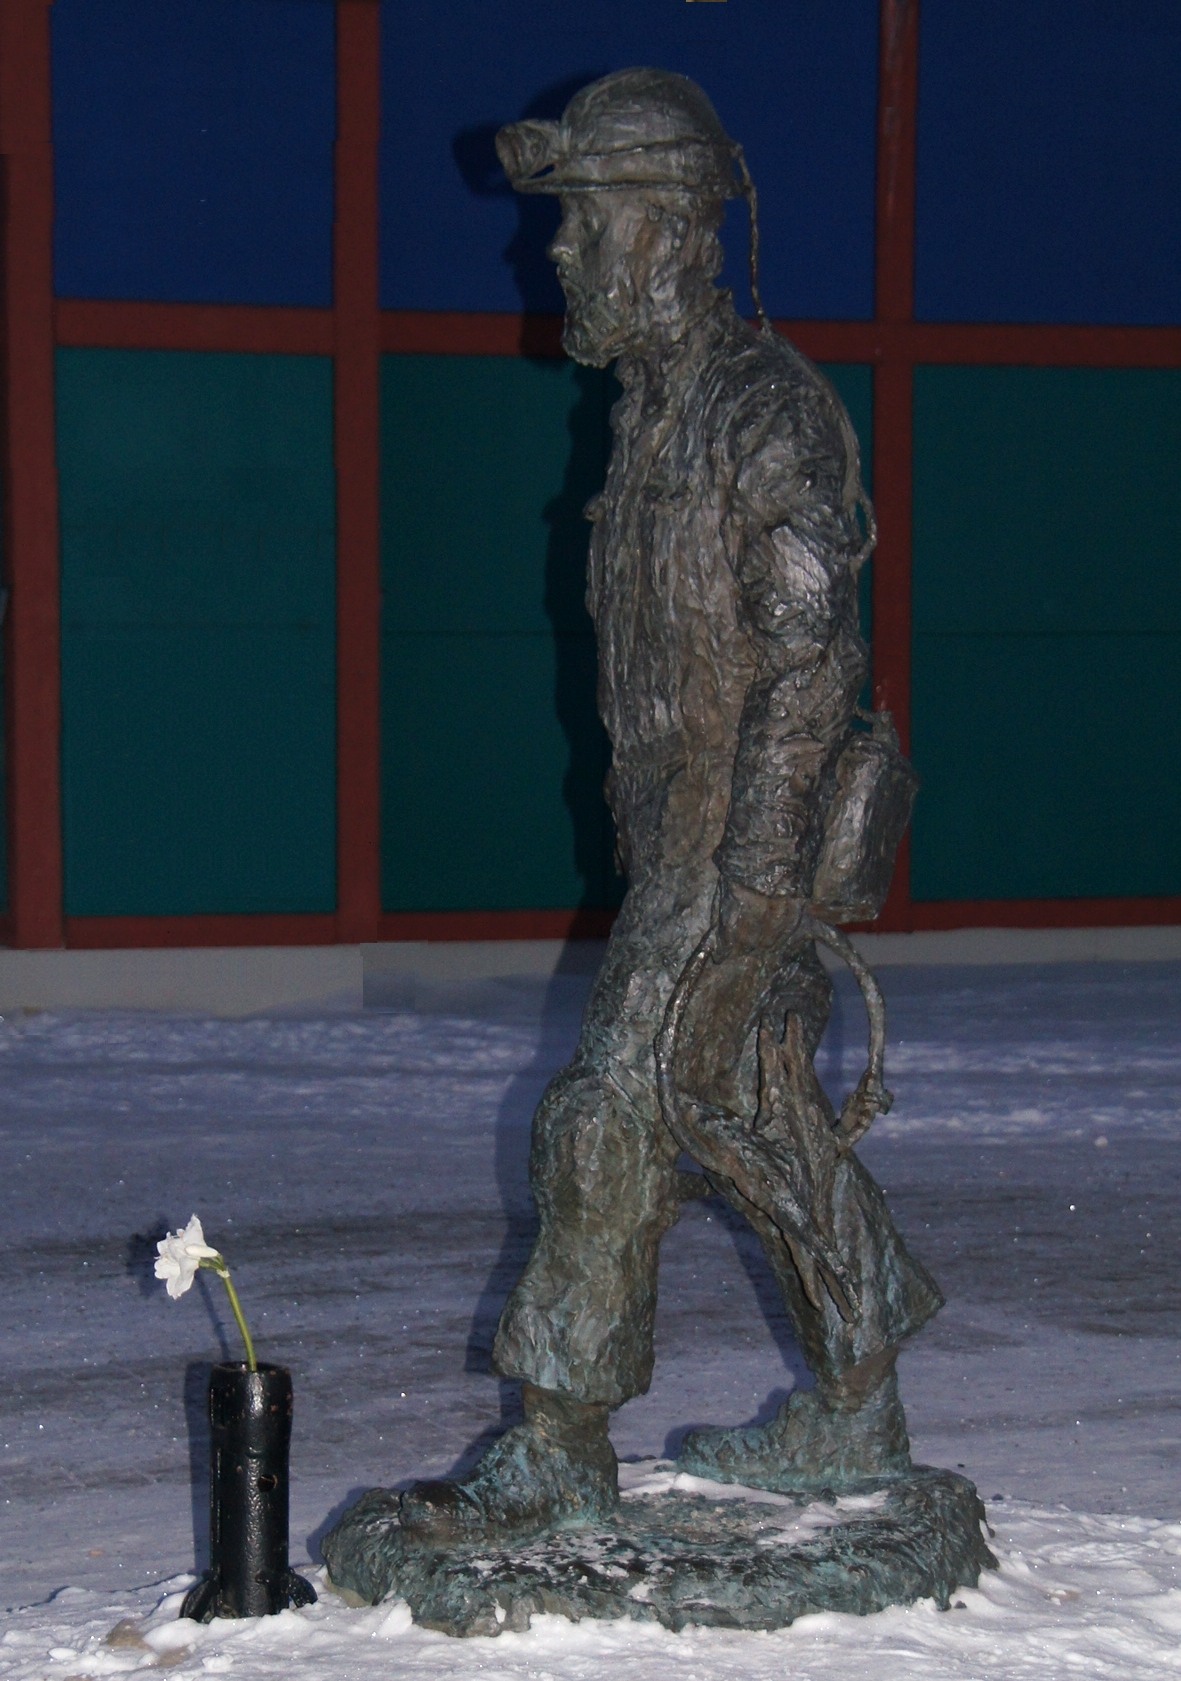 Sculpture of miner